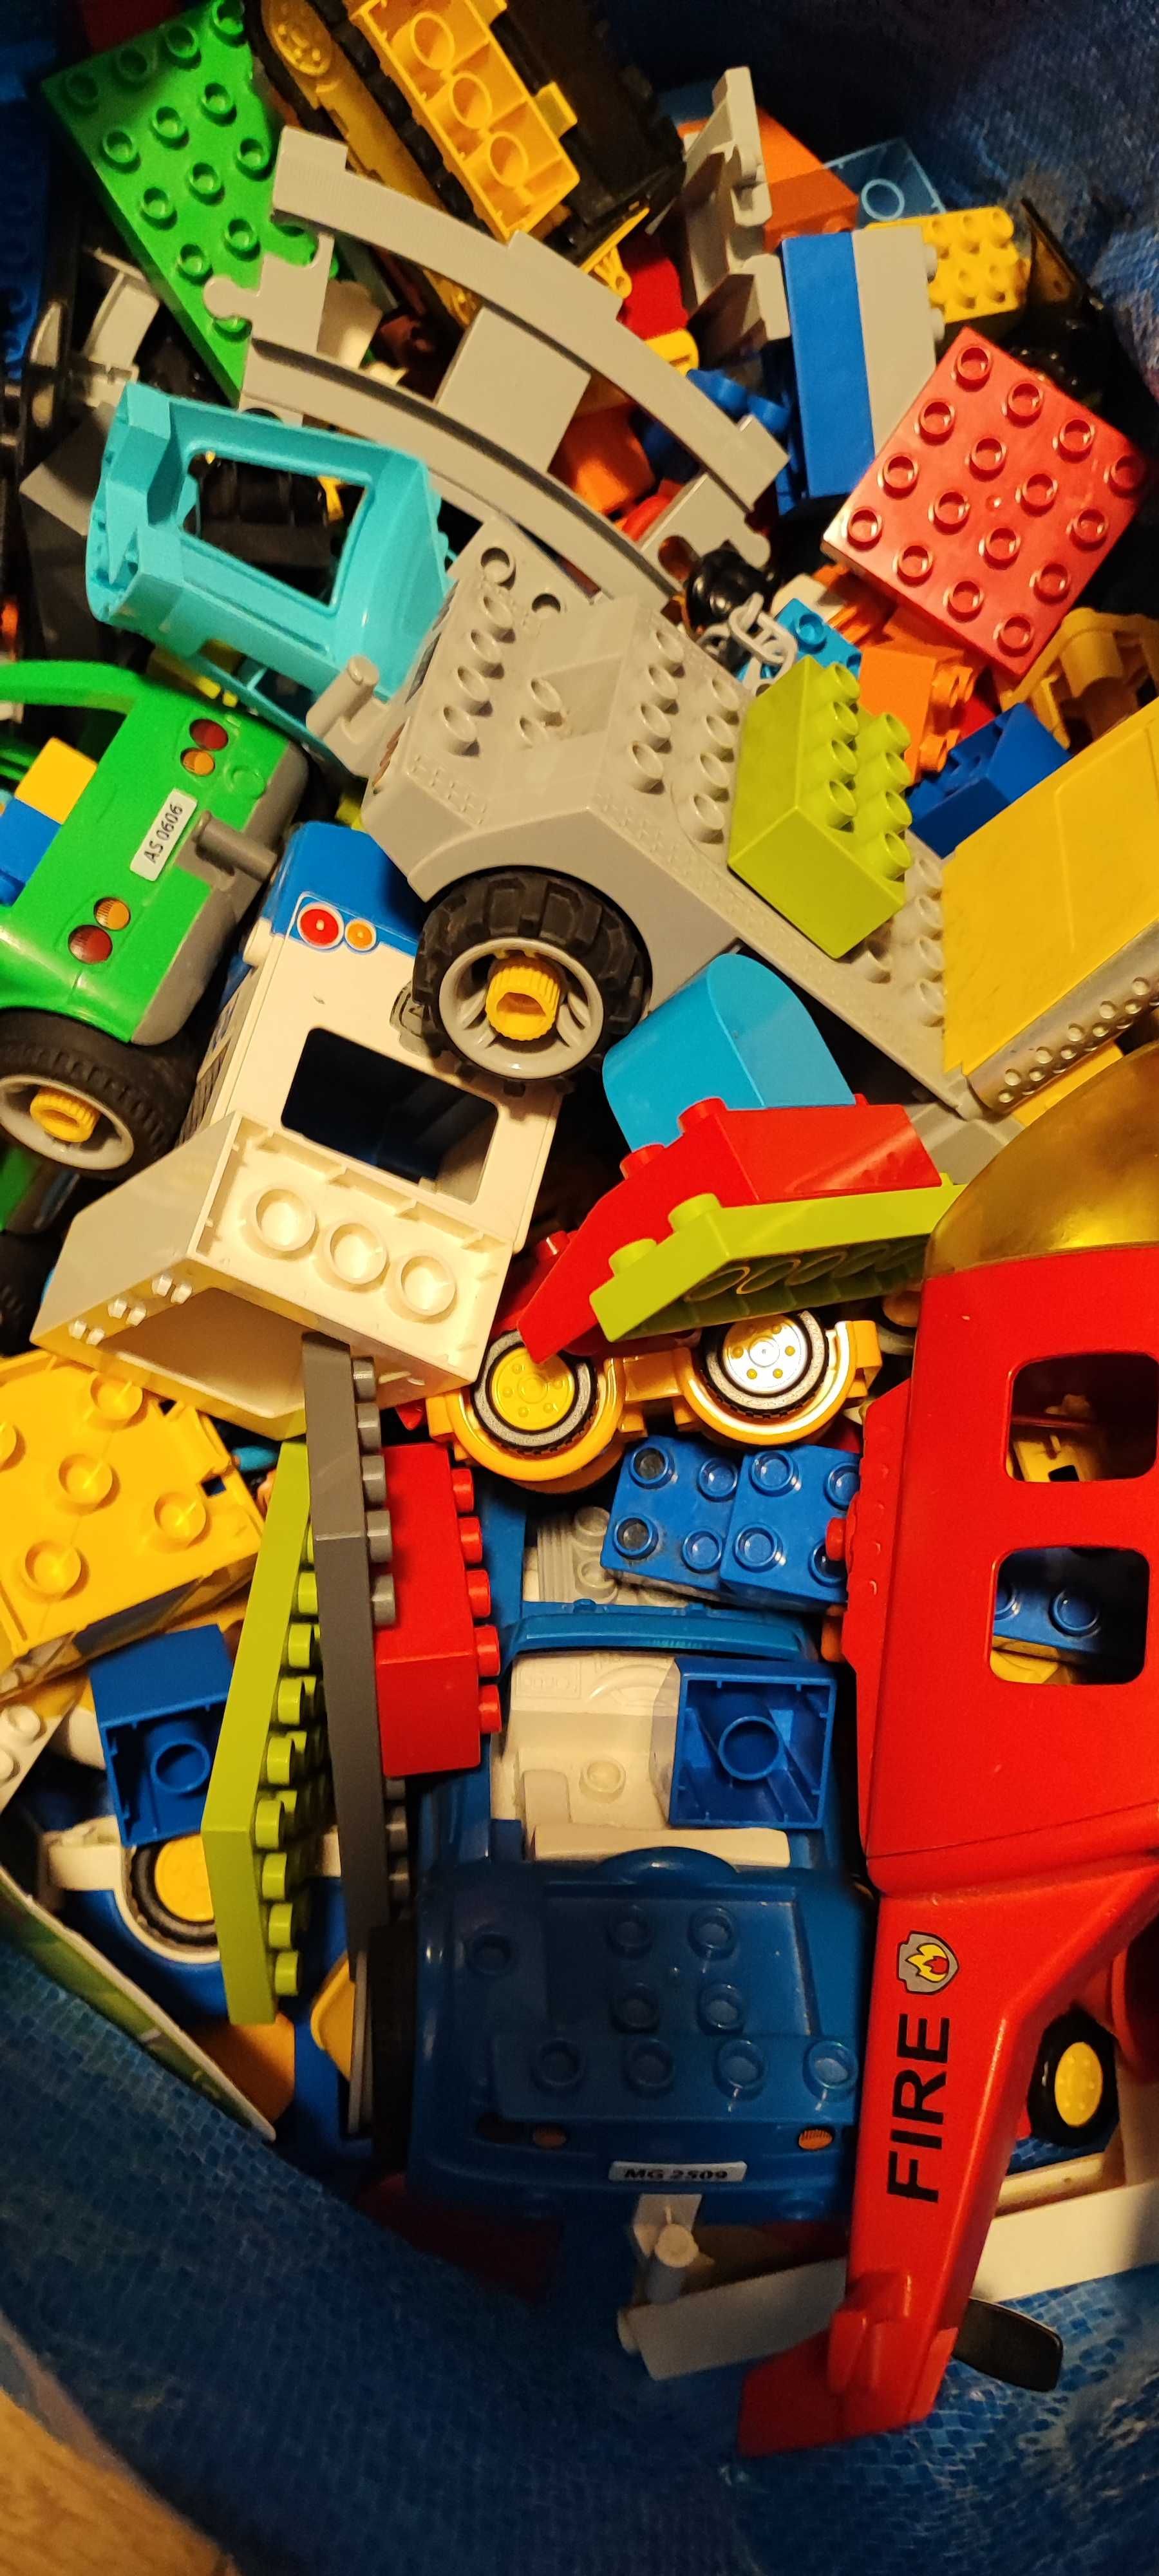 LEGO Duplo ogromny zestaw